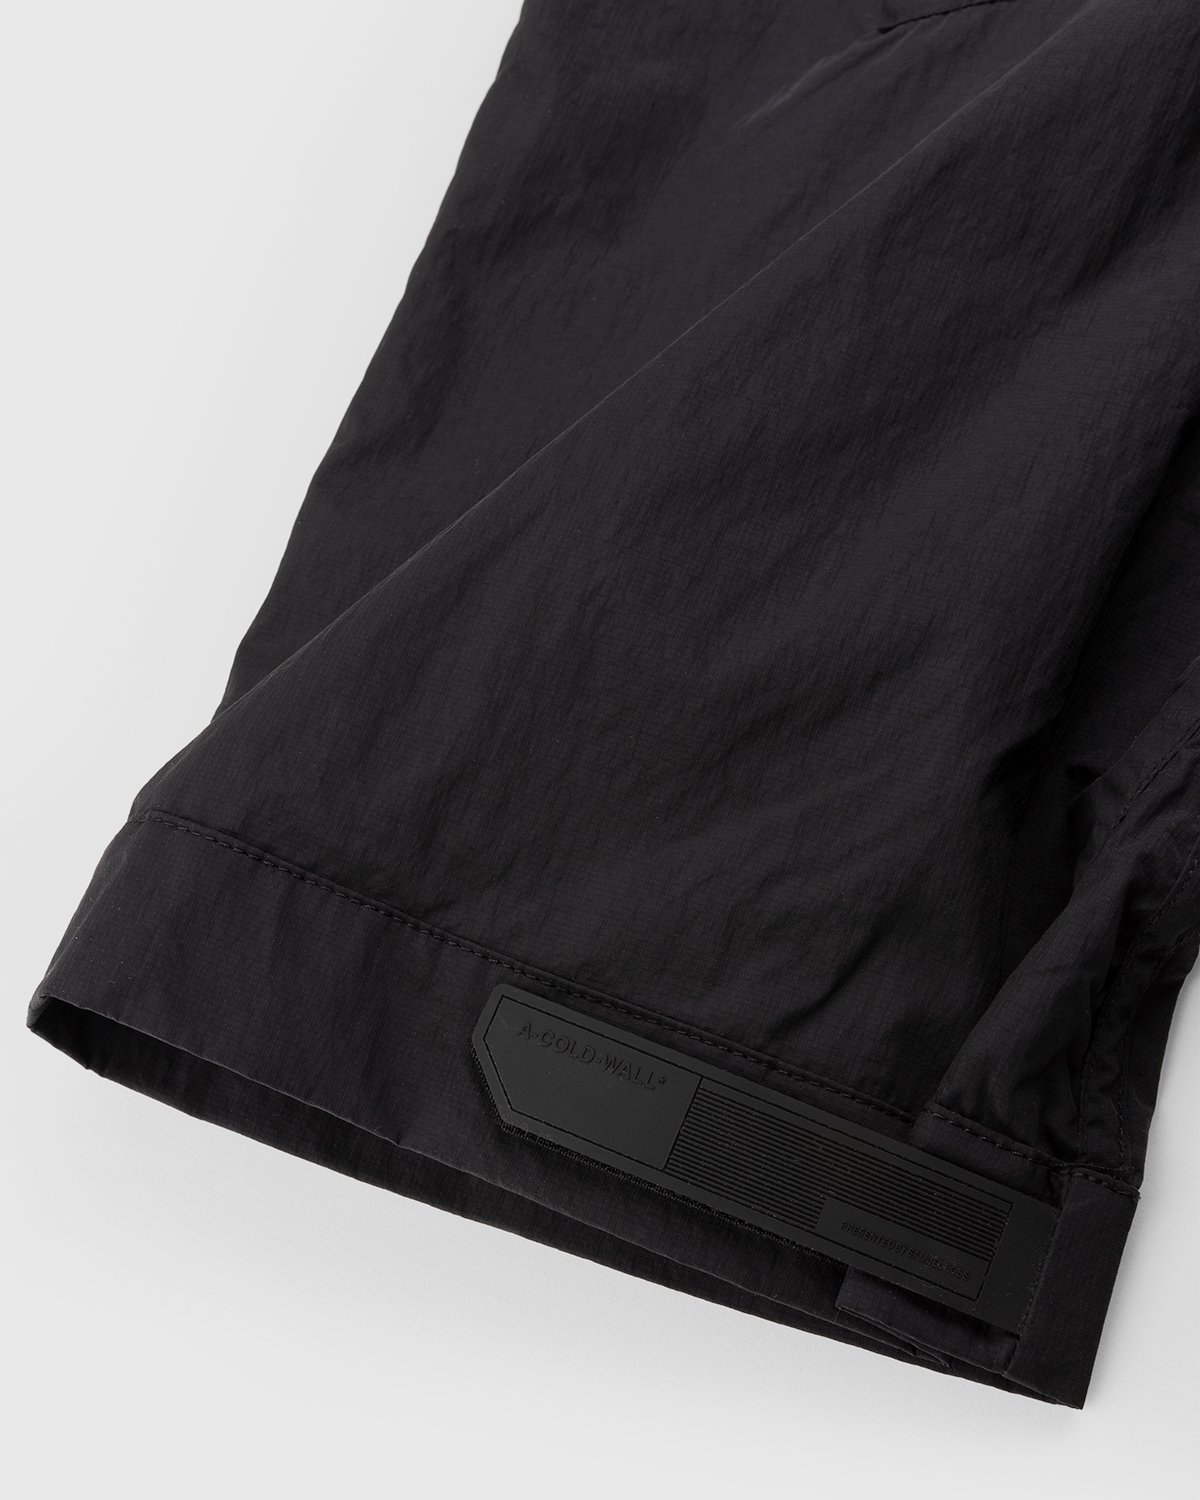 A-Cold-Wall* - Portage Pant Black - Clothing - Black - Image 5